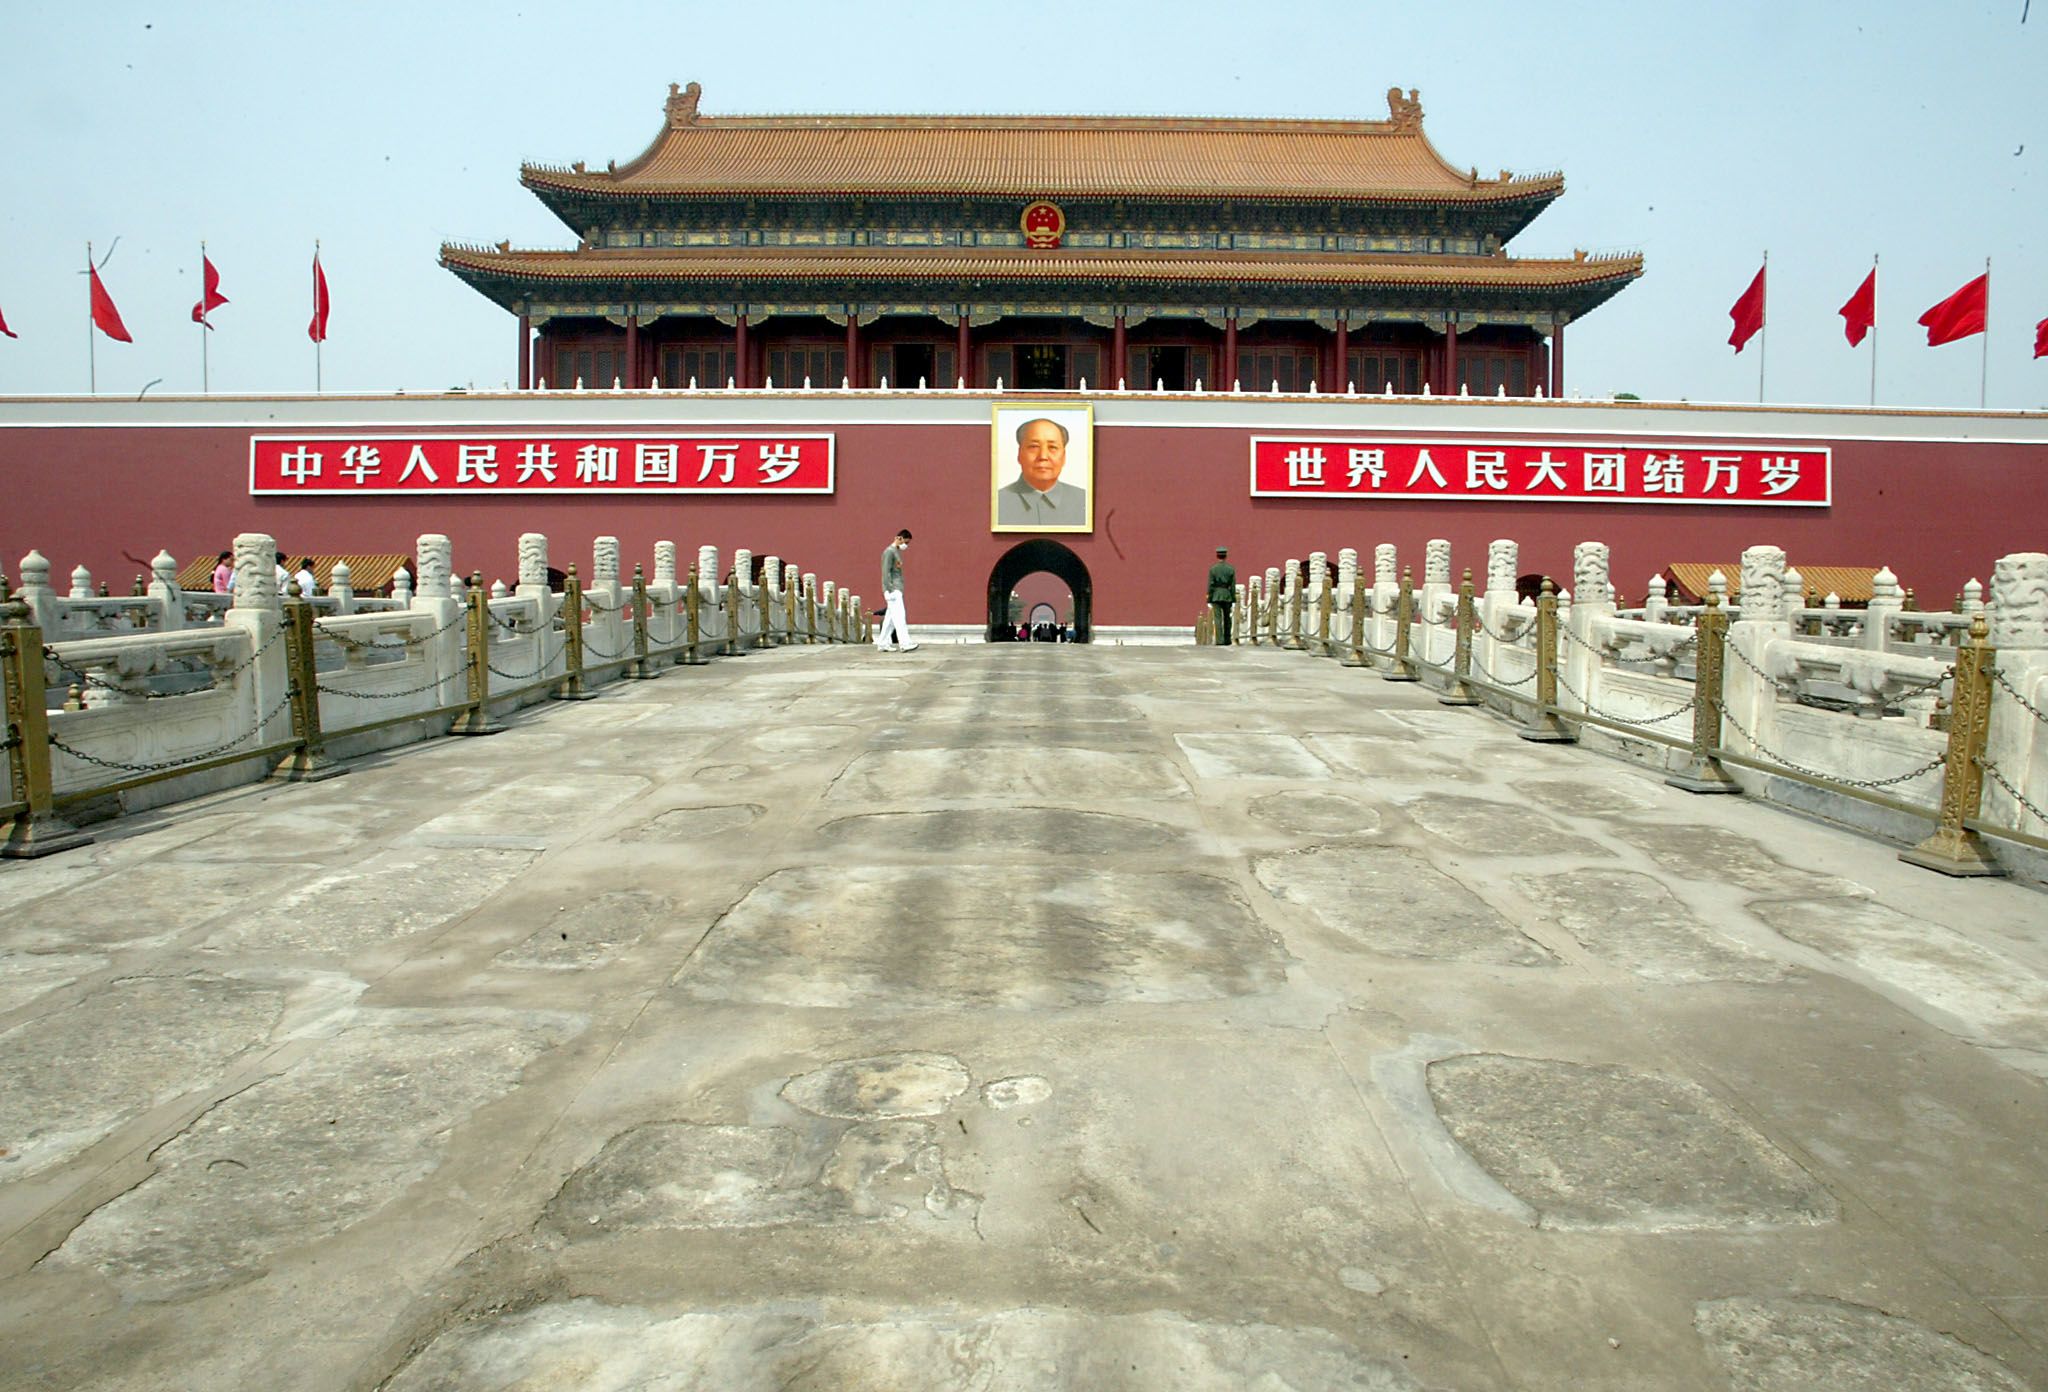 china architecture history